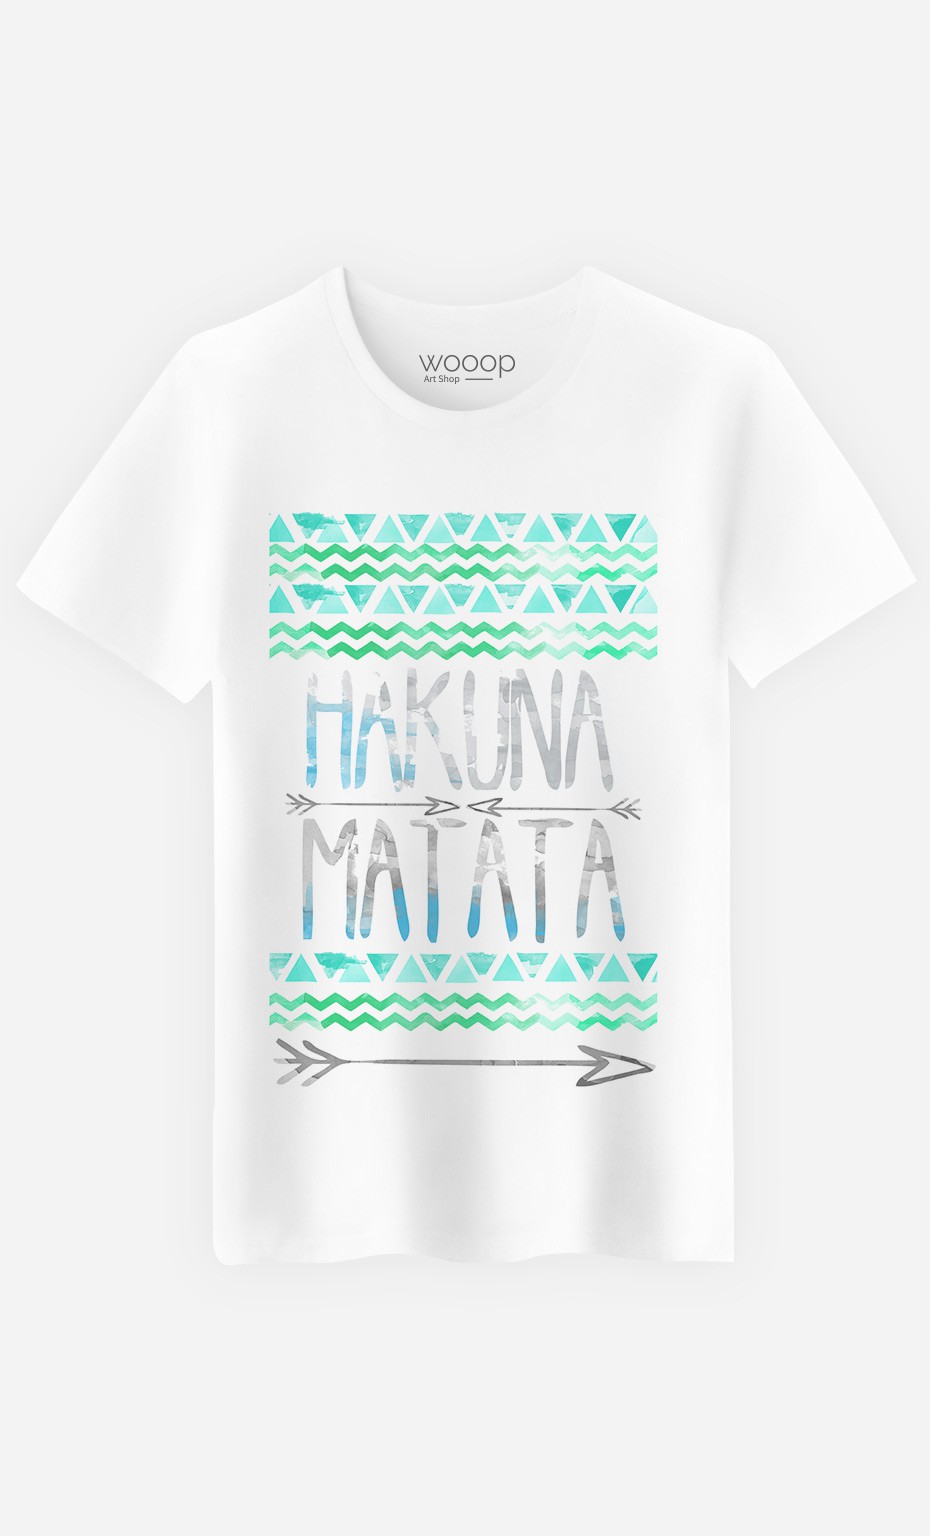 Despertar exégesis medias T-Shirt Hakuna Matata - Art Shop - Wooop.com